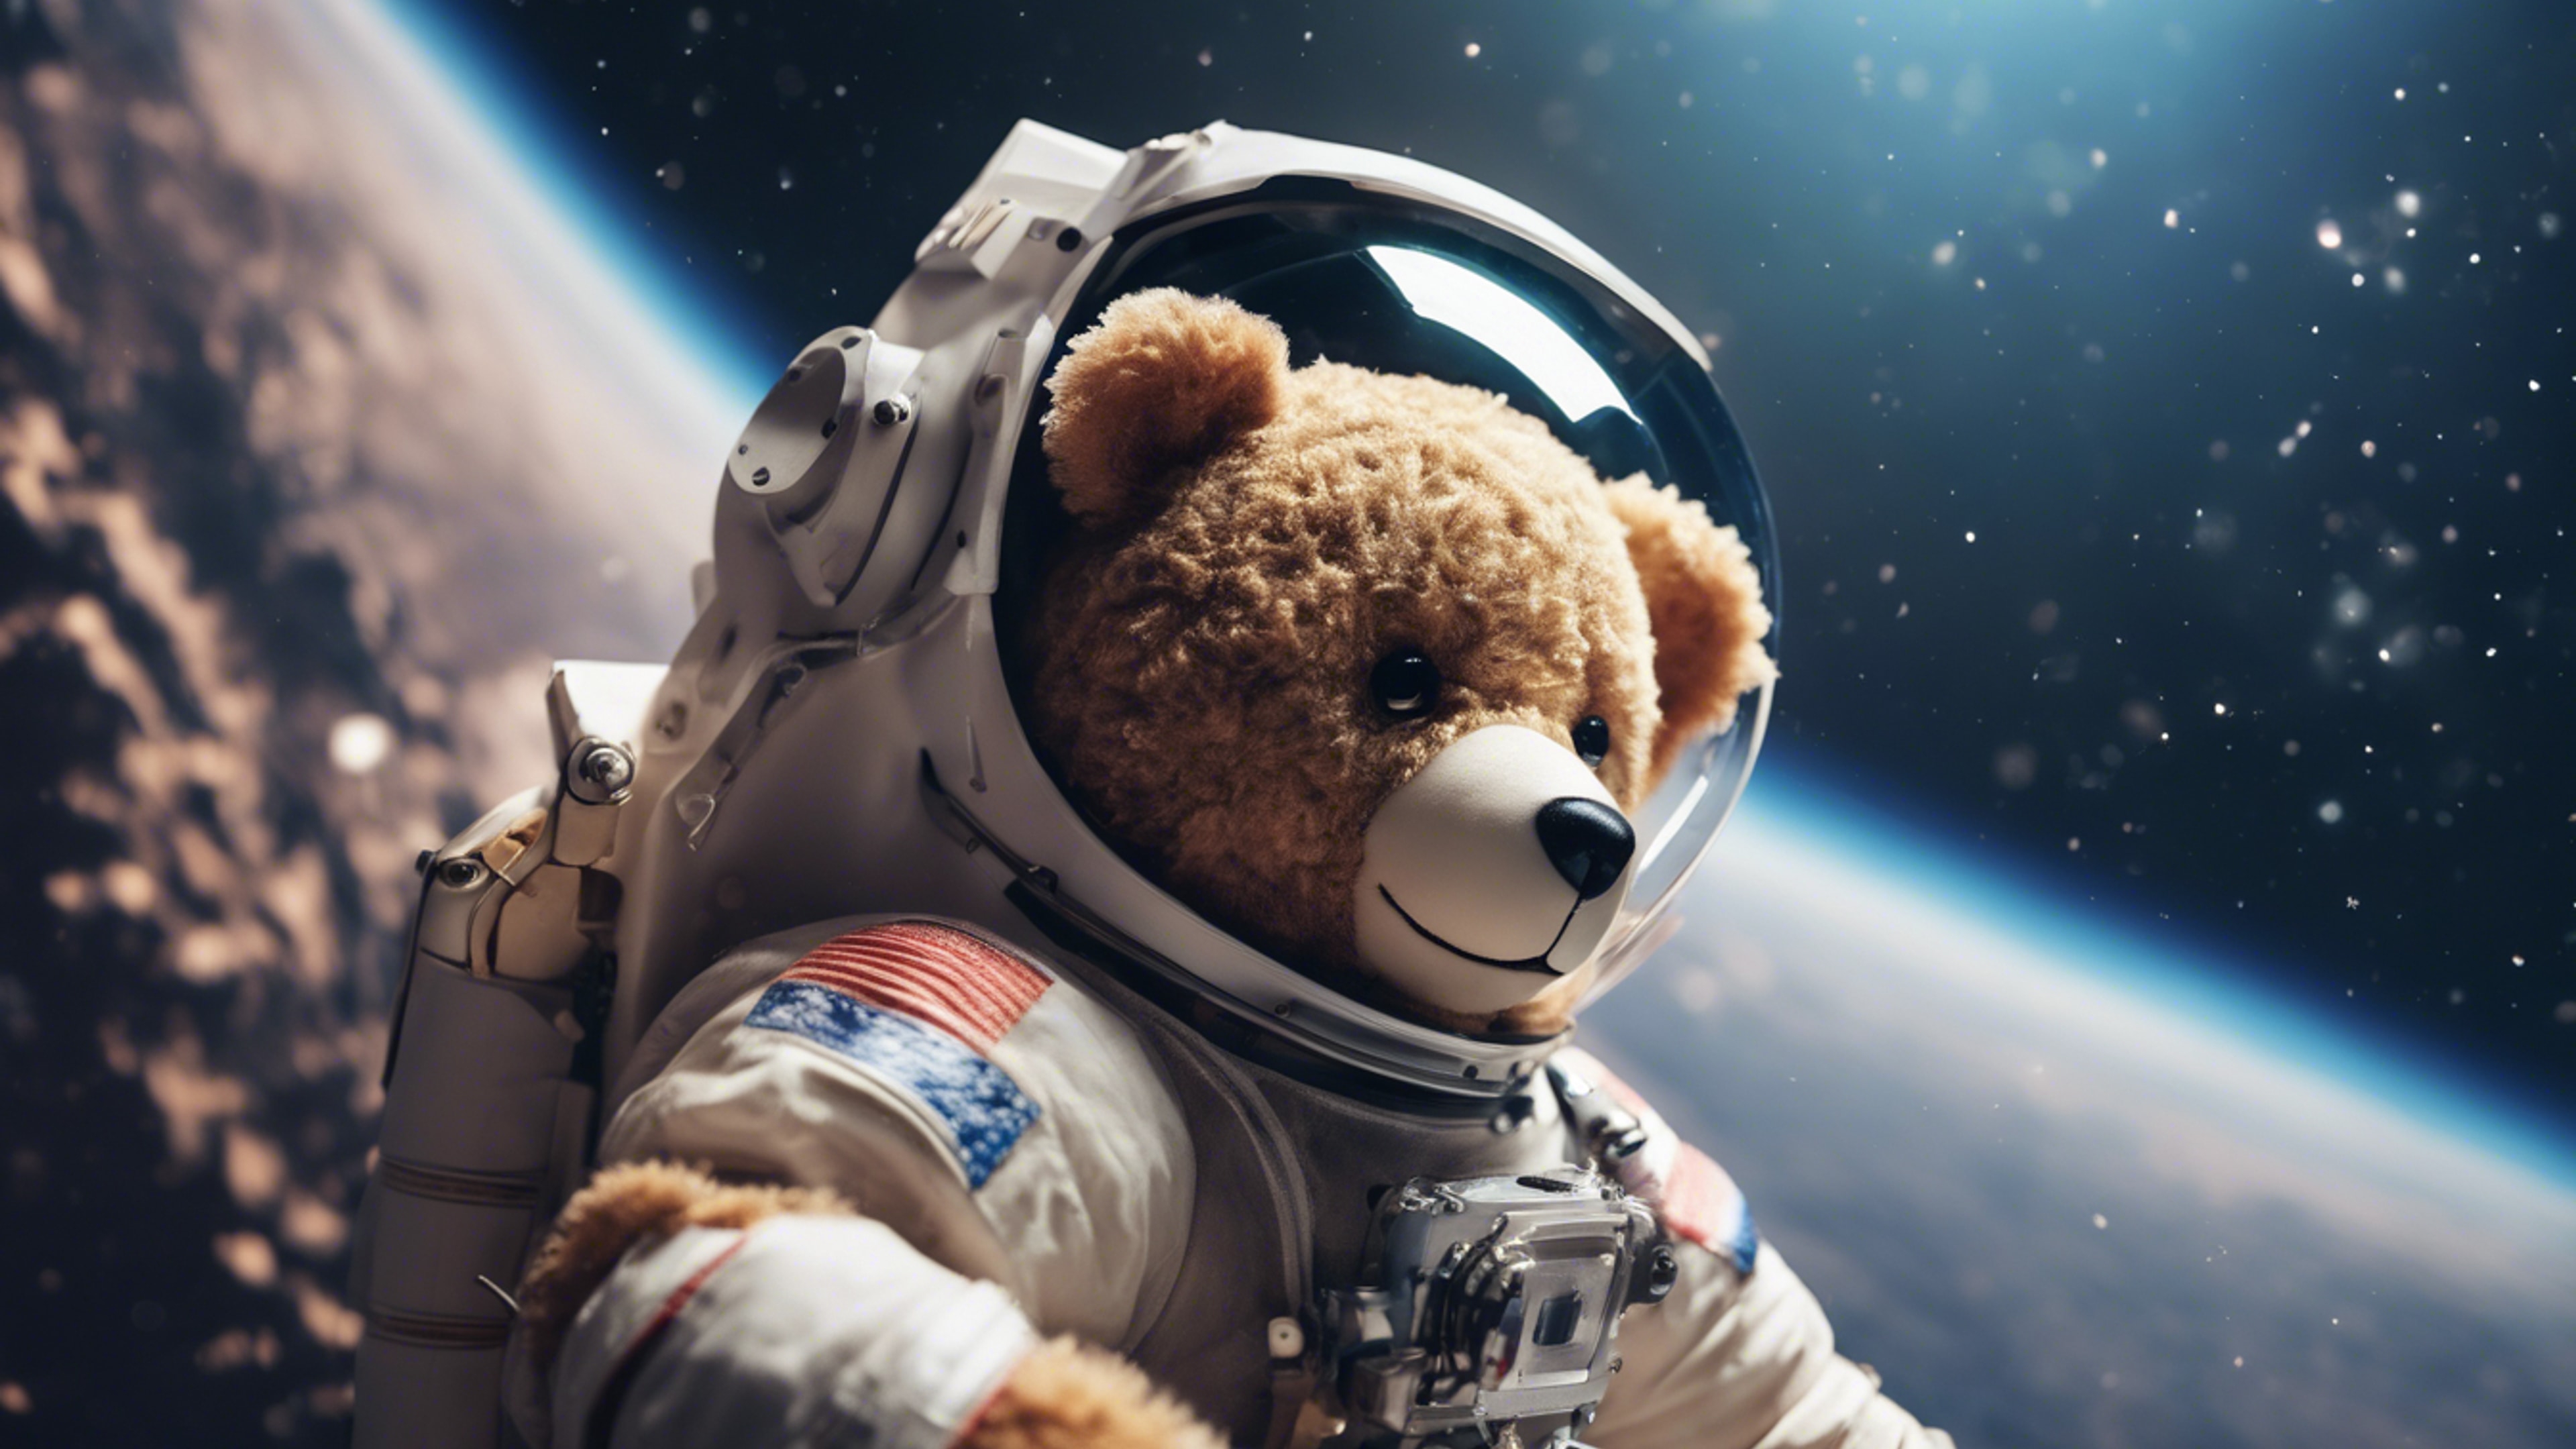 A teddy bear astronaut floating in space. Papel de parede[264e253f630141468c44]